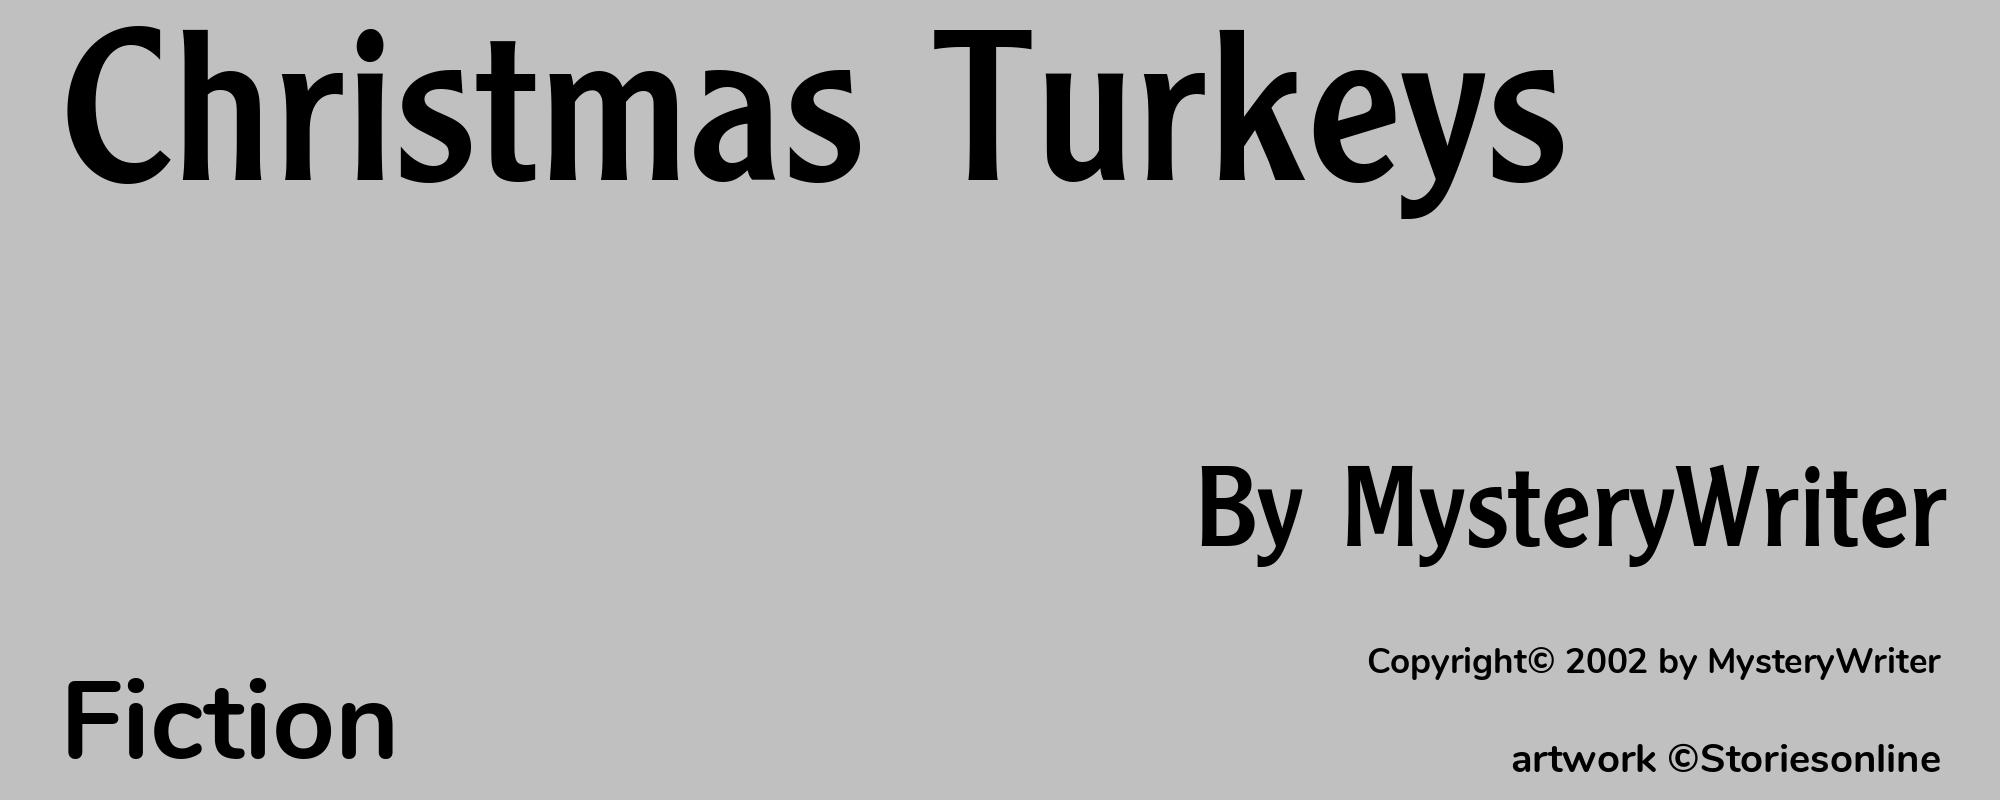 Christmas Turkeys - Cover